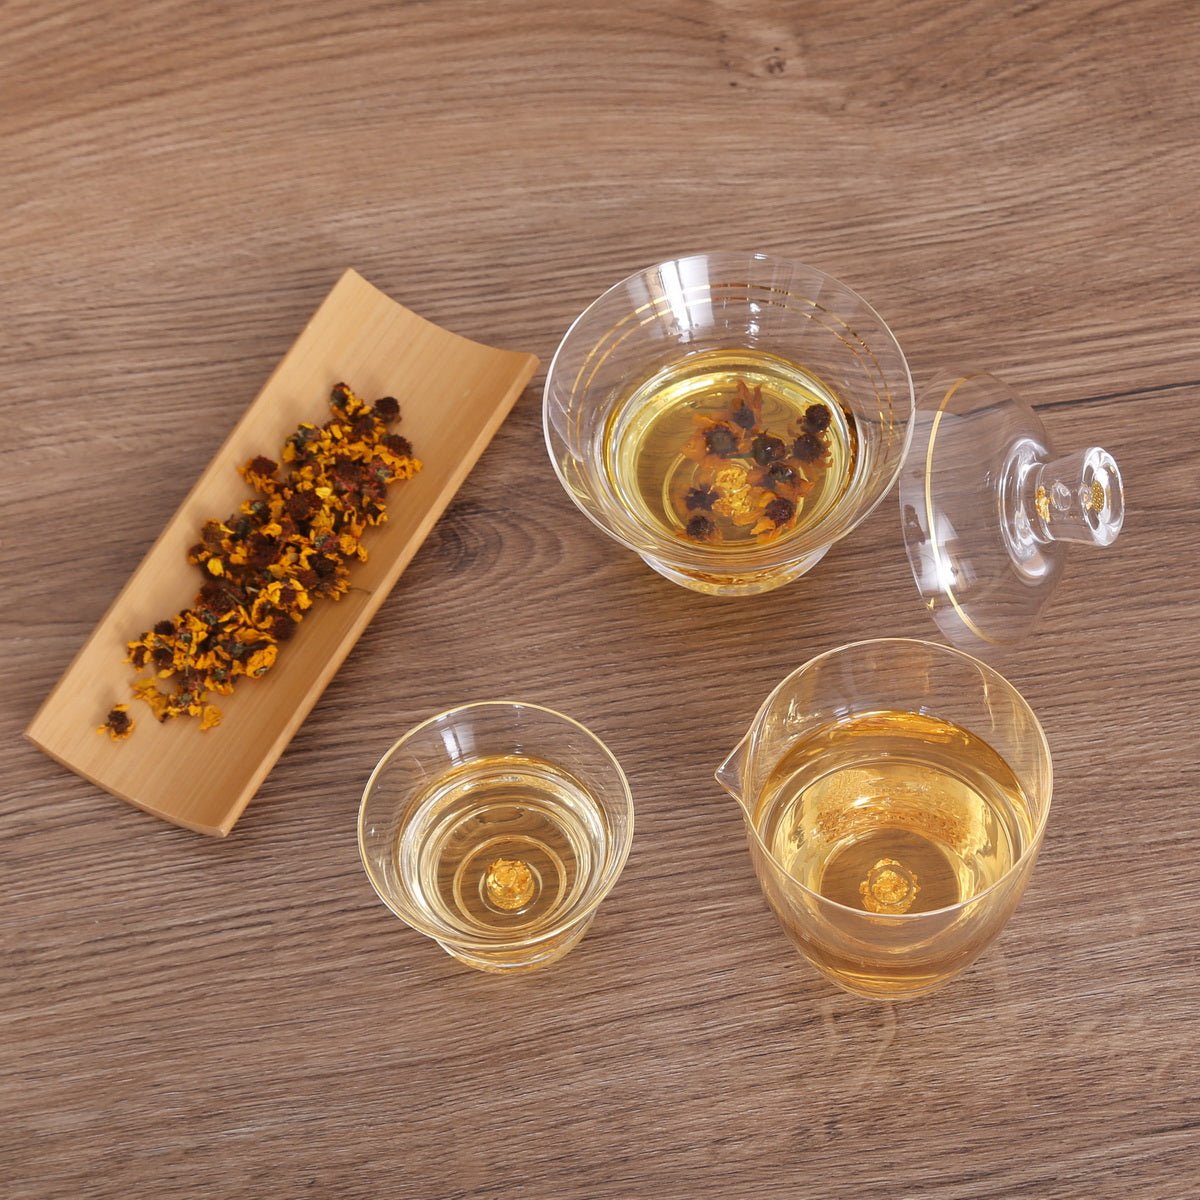 Glassware Gift Teacup with 24K Gold Foil - Taishan Tea Club